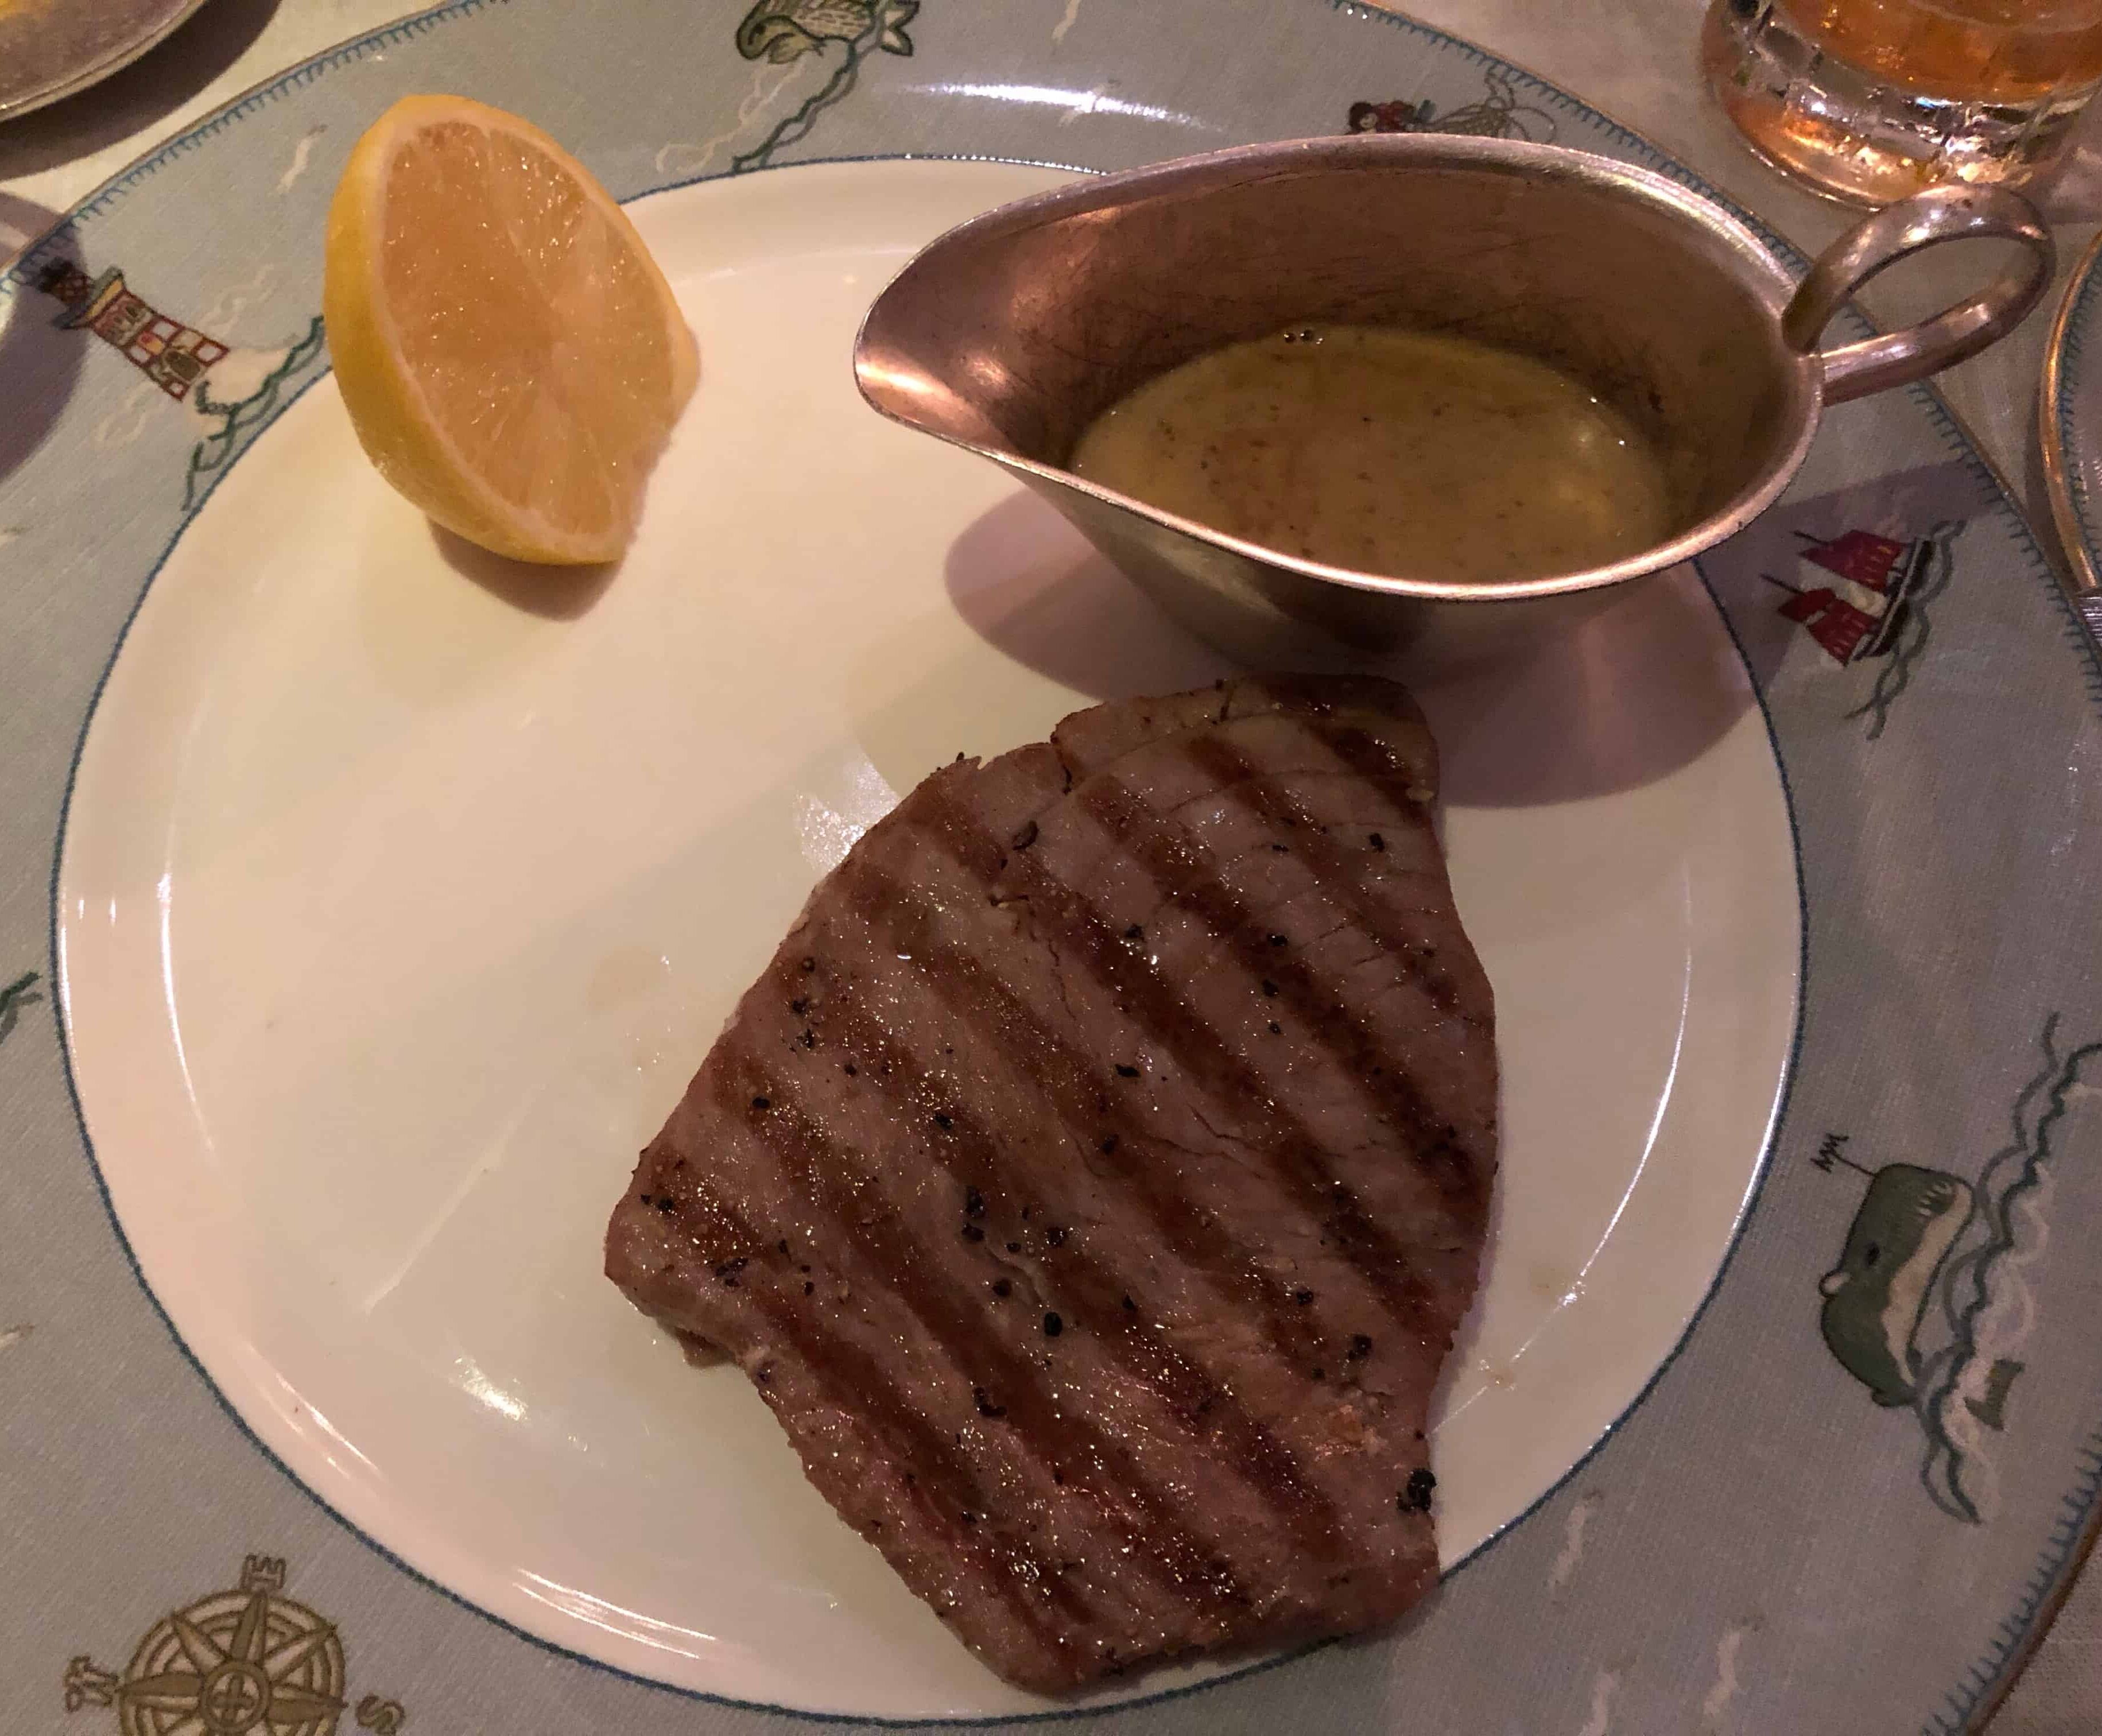 Grilled tuna at Ham Yard Bar & Restaurant in London, England